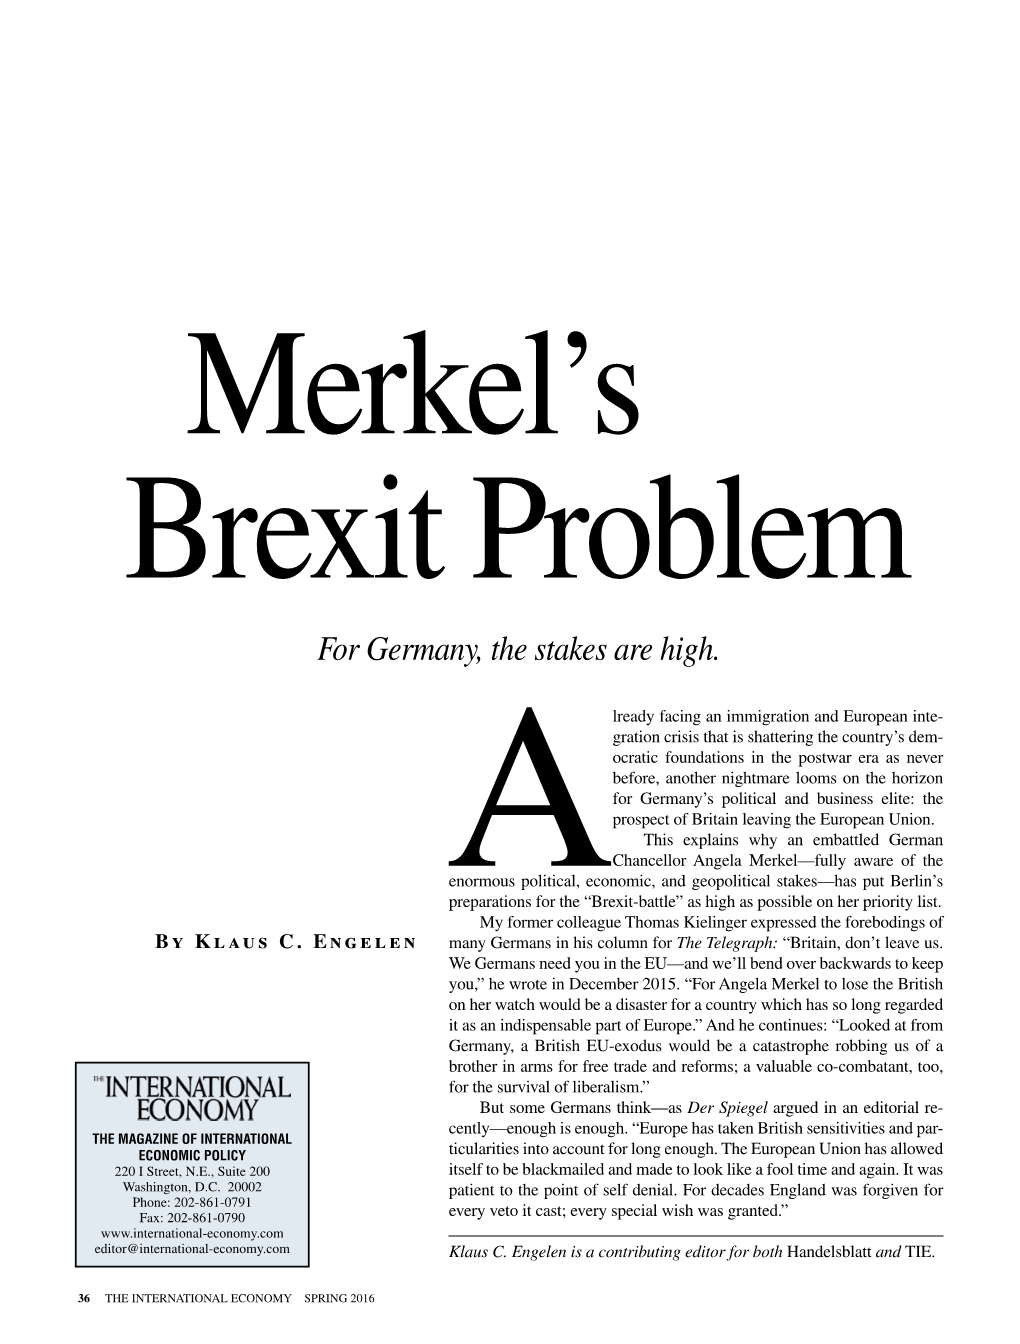 Merkel's Brexit Problem